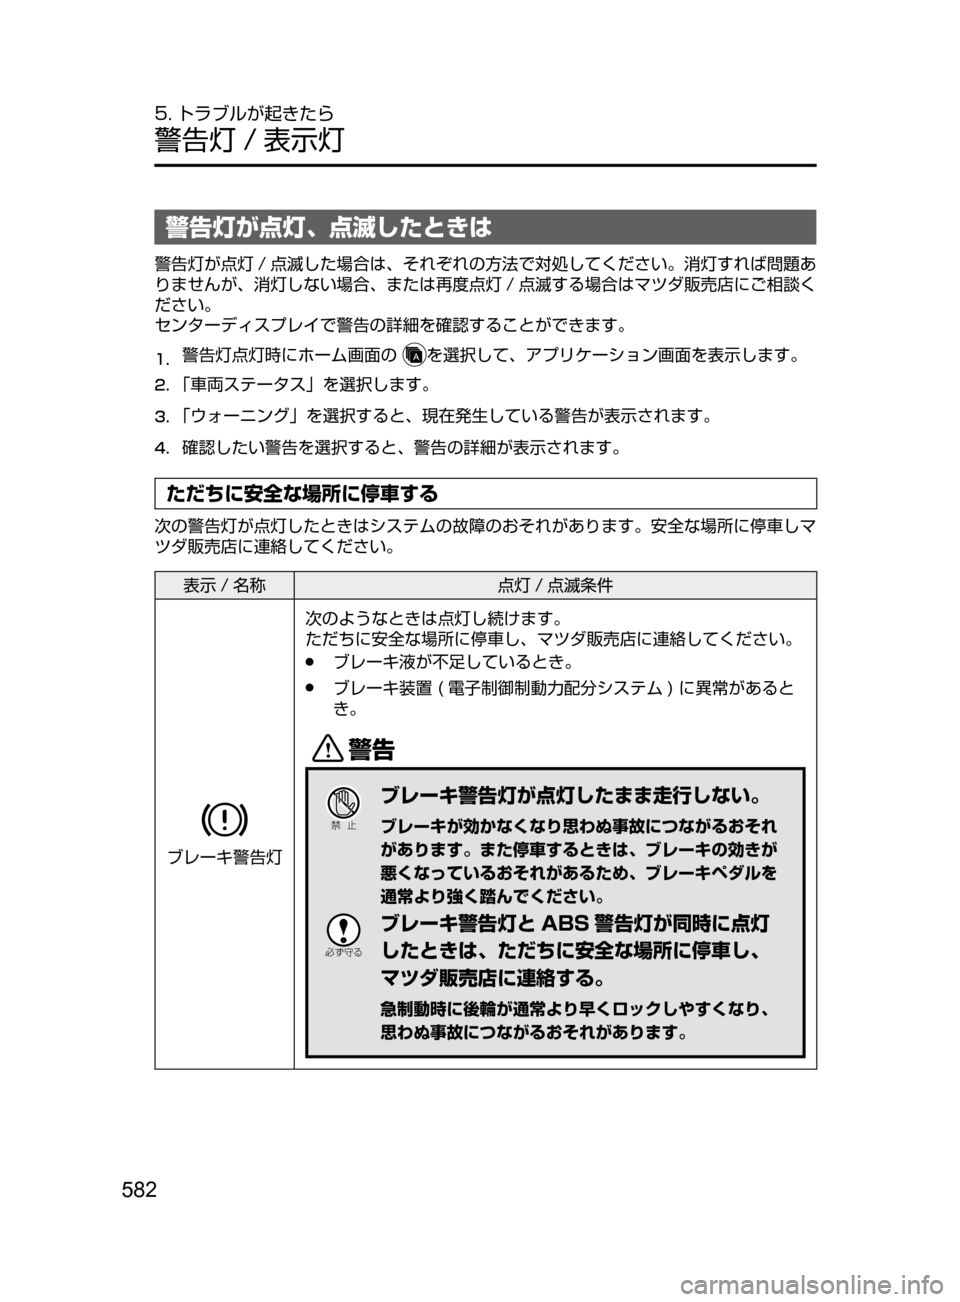 MAZDA MODEL ATENZA 2016  アテンザ｜取扱説明書 (in Japanese) 582
5. トラブルが起きたら
警告灯 / 表示灯
警告灯が点灯､ 点滅したときは
警告灯が点灯 / 点滅した場合は､ それぞれの方法で対処してください。�